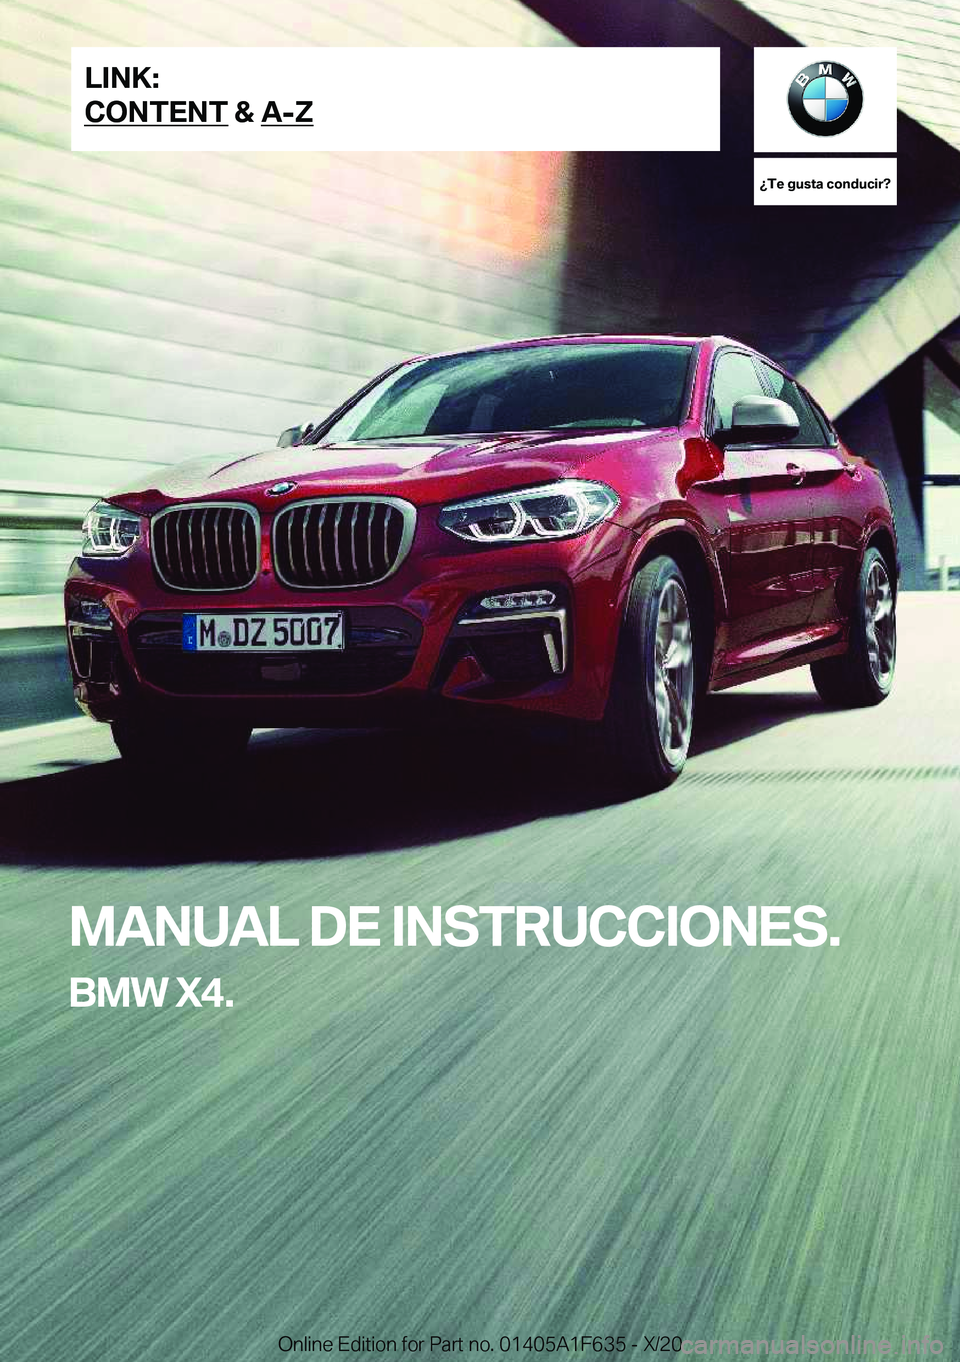 BMW X4 2021  Manuales de Empleo (in Spanish) ��T�e��g�u�s�t�a��c�o�n�d�u�c�i�r� 
�M�A�N�U�A�L��D�E��I�N�S�T�R�U�C�C�I�O�N�E�S�.
�B�M�W��X�4�.�L�I�N�K�:
�C�O�N�T�E�N�T��&��A�-�Z�O�n�l�i�n�e��E�d�i�t�i�o�n��f�o�r��P�a�r�t��n�o�.��0�1�